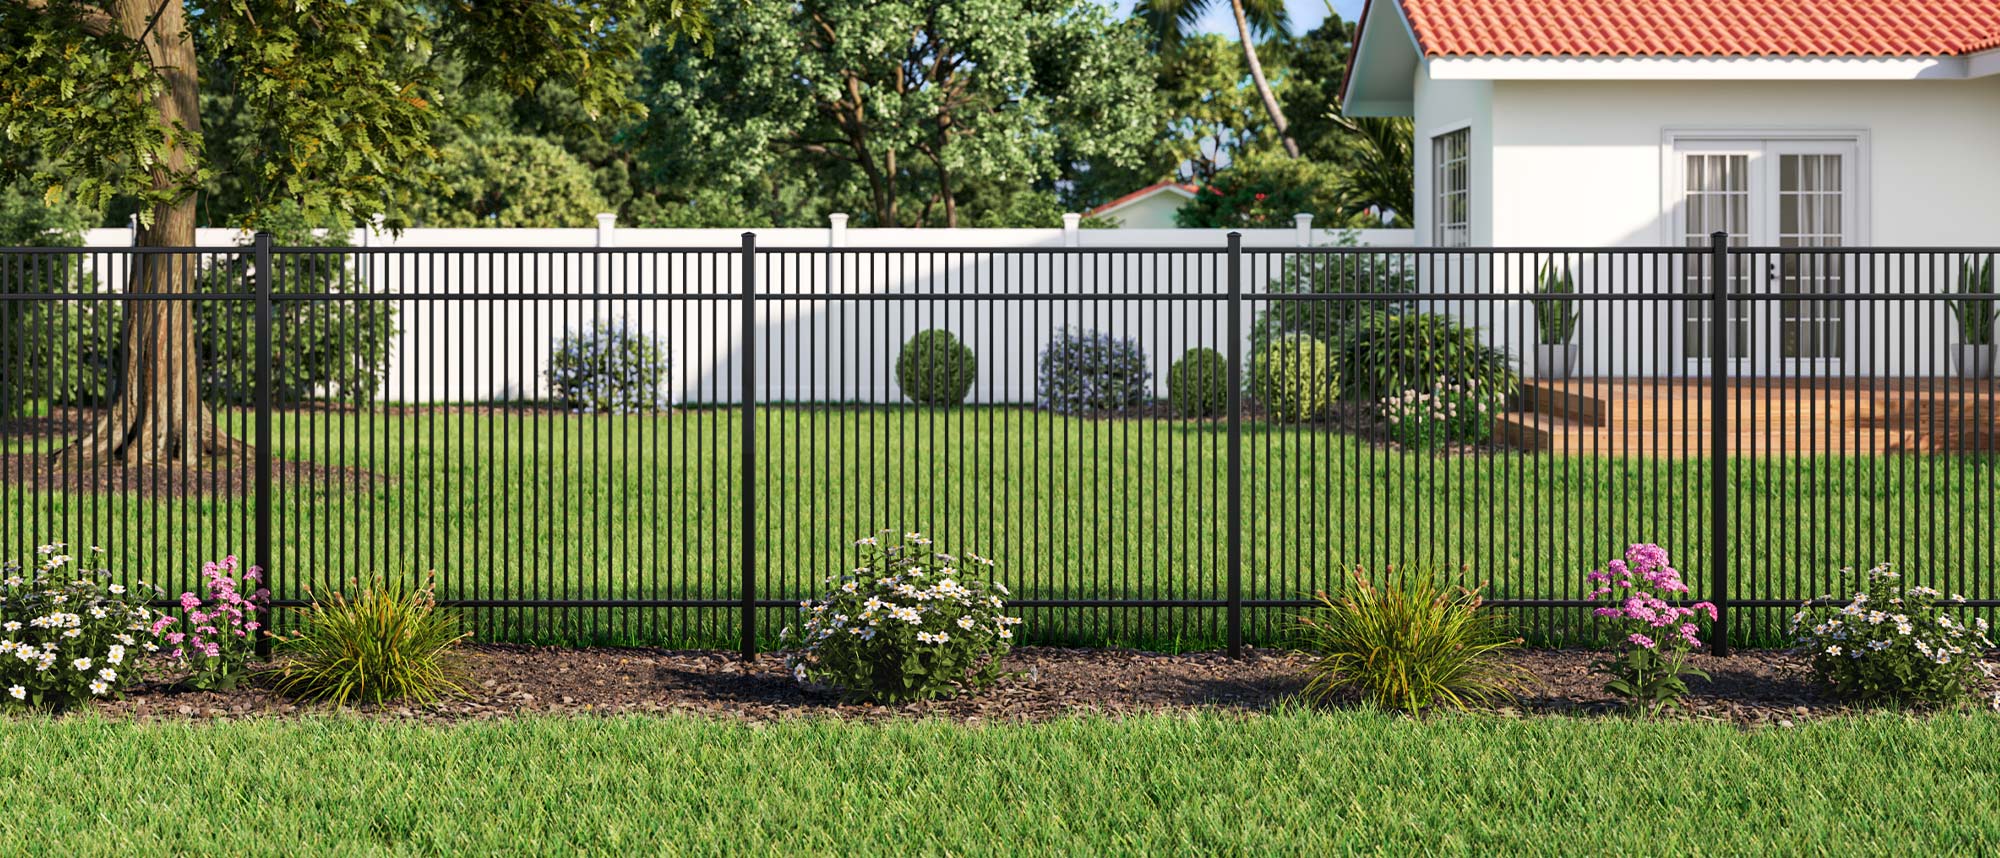 Evansville Indiana Aluminum Security Fence - Travertine Style